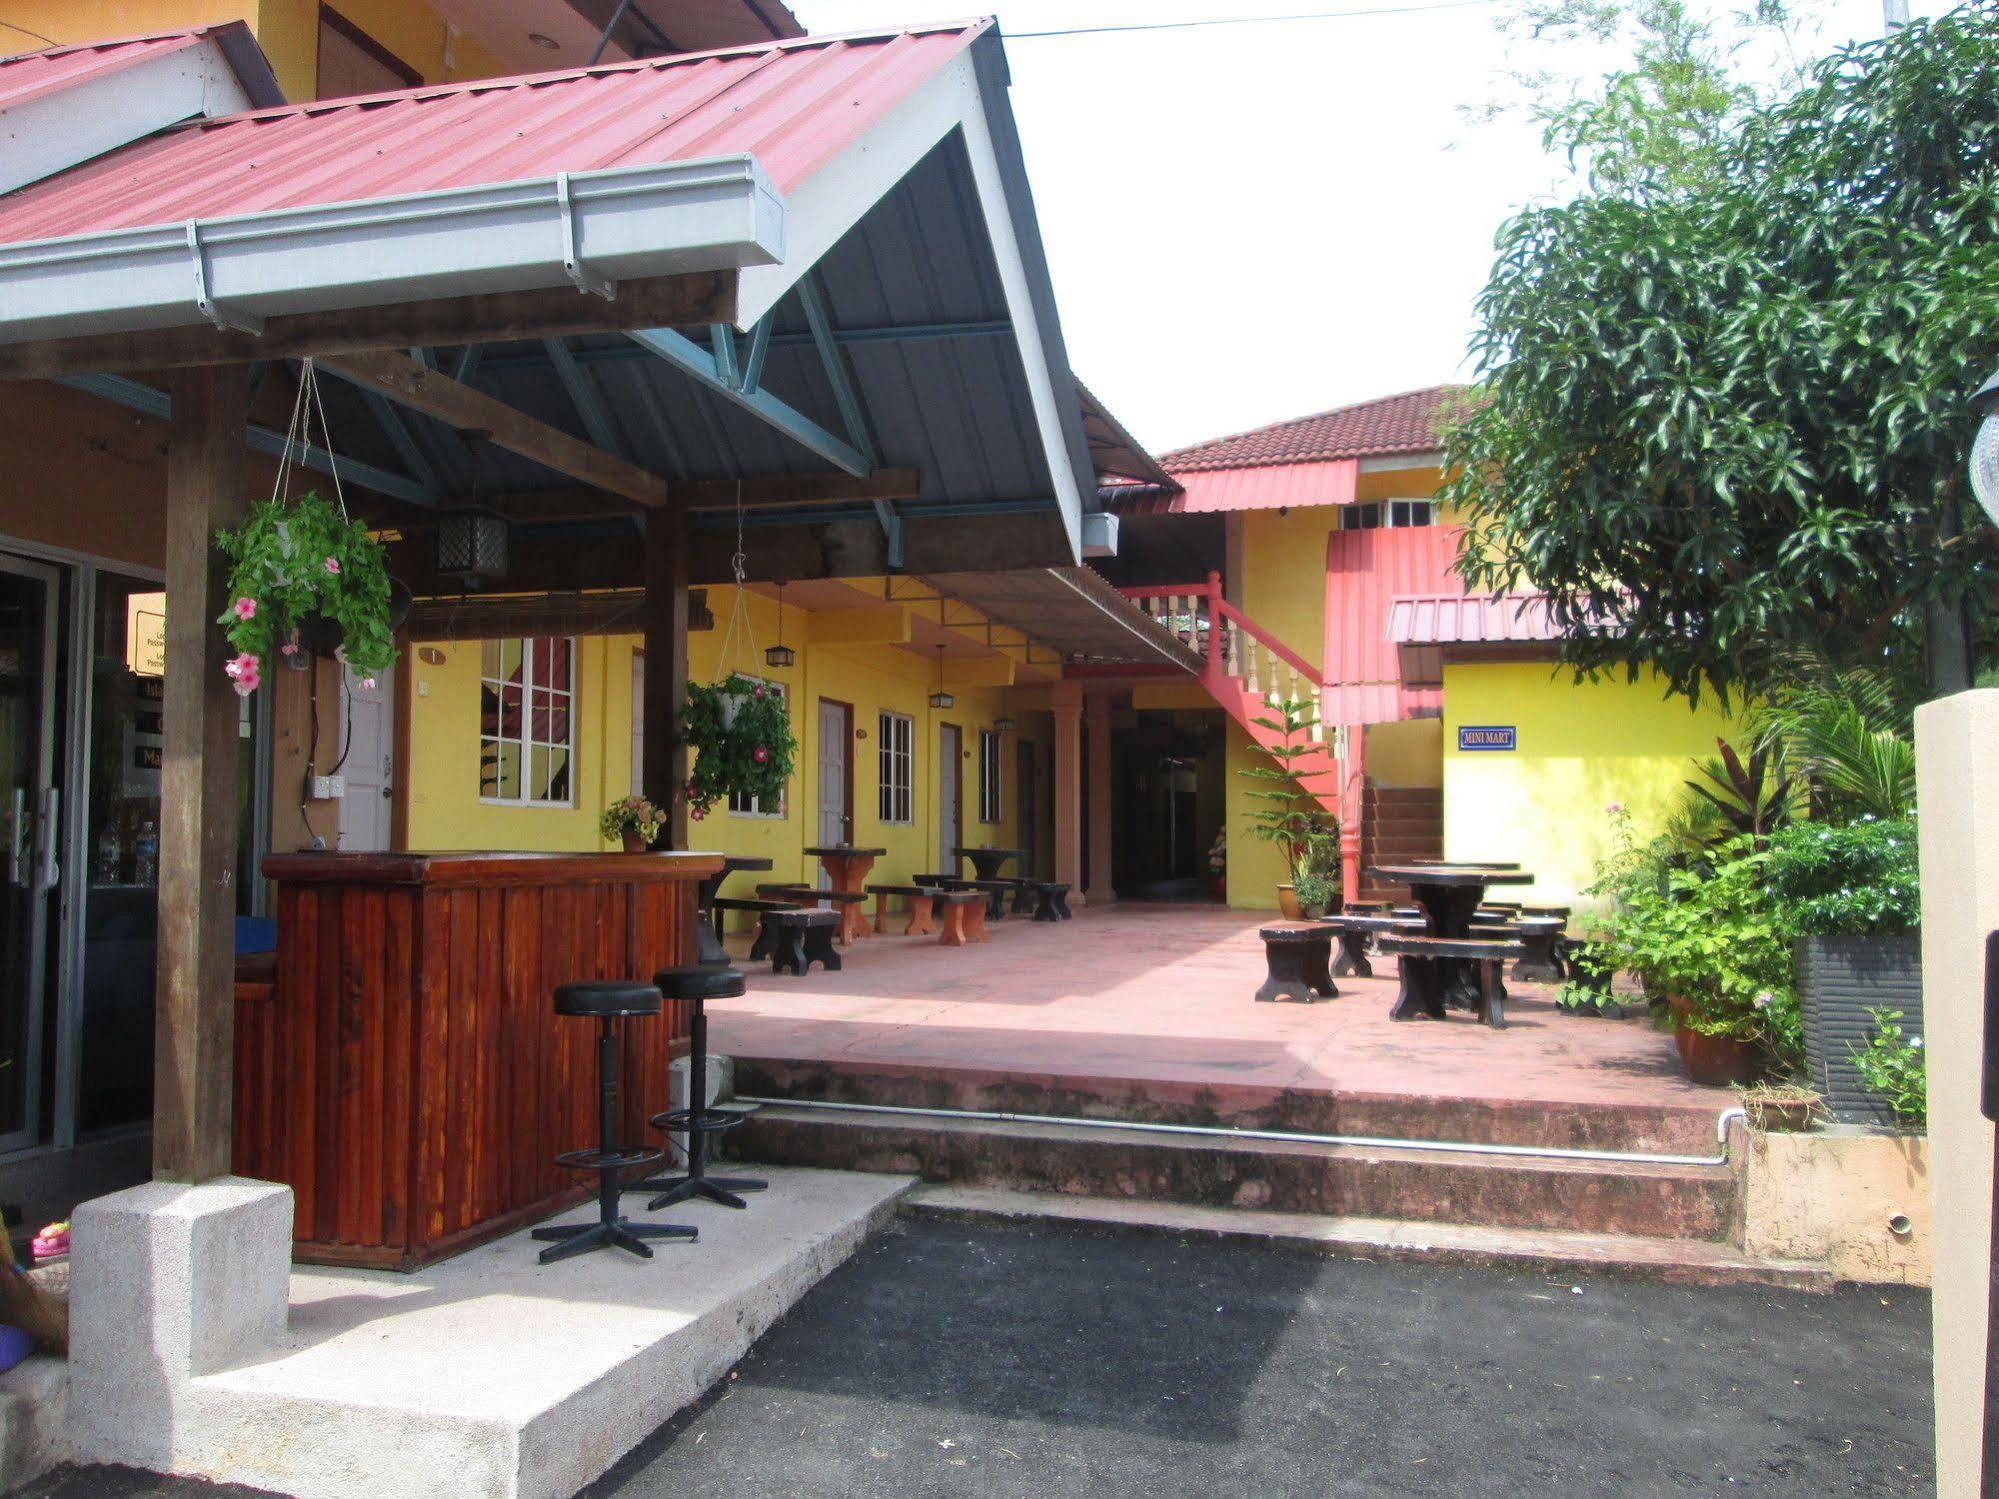 Motel Seri Mutiara Kuah Exterior photo